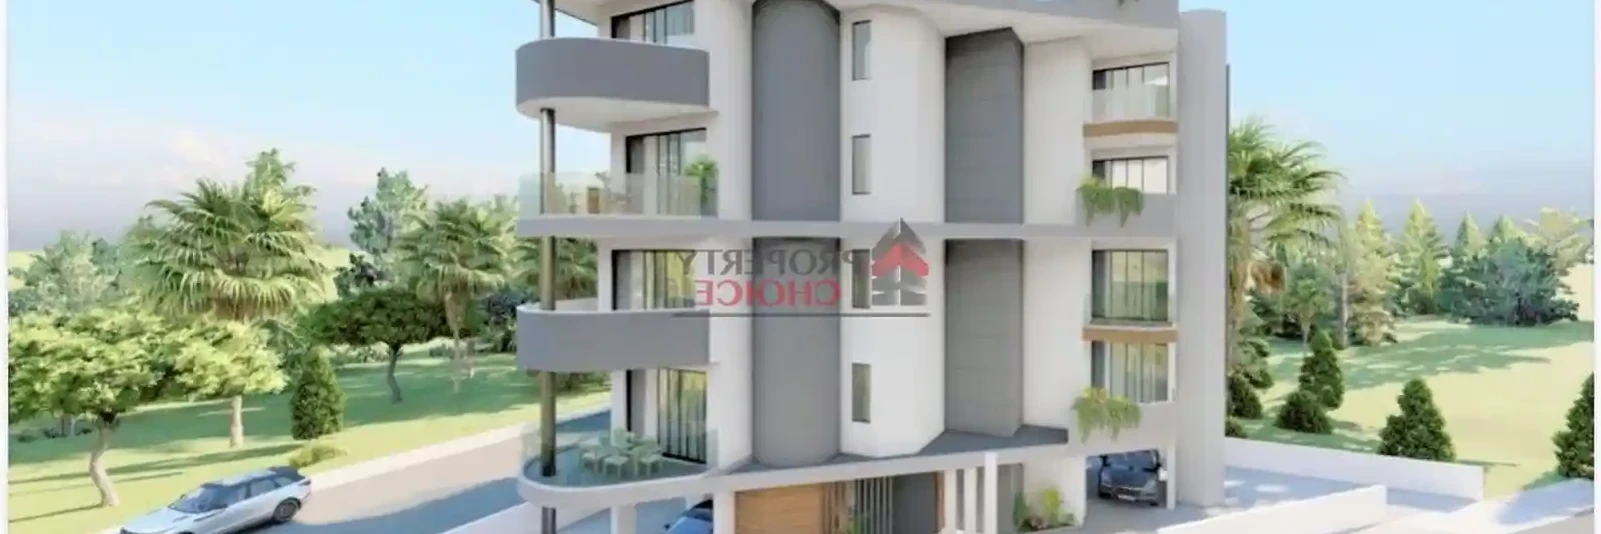 2-bedroom penthouse fоr sаle €275.000, image 1